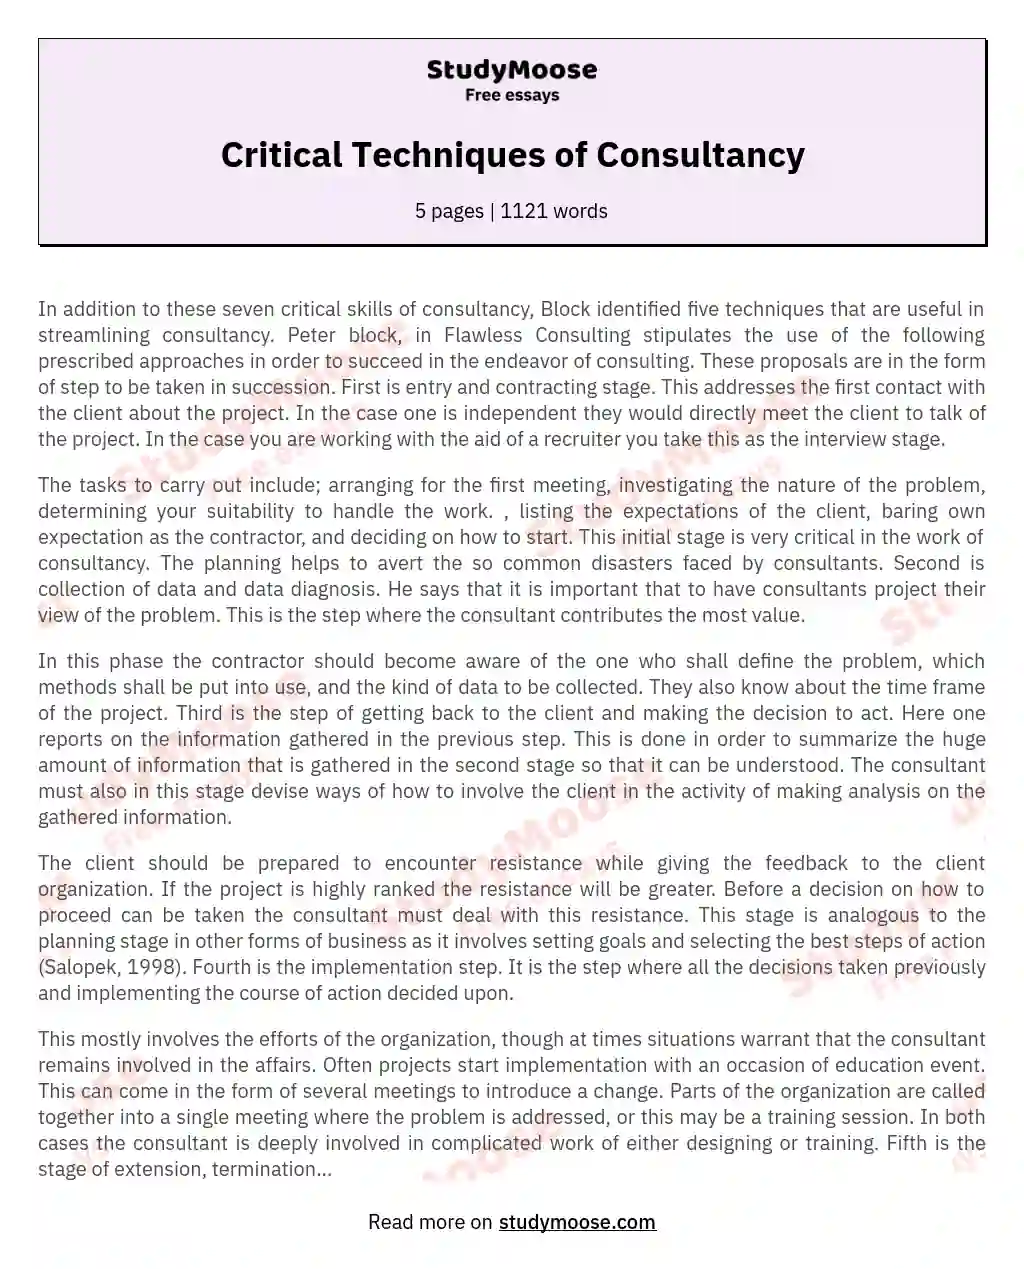 Critical Techniques of Consultancy